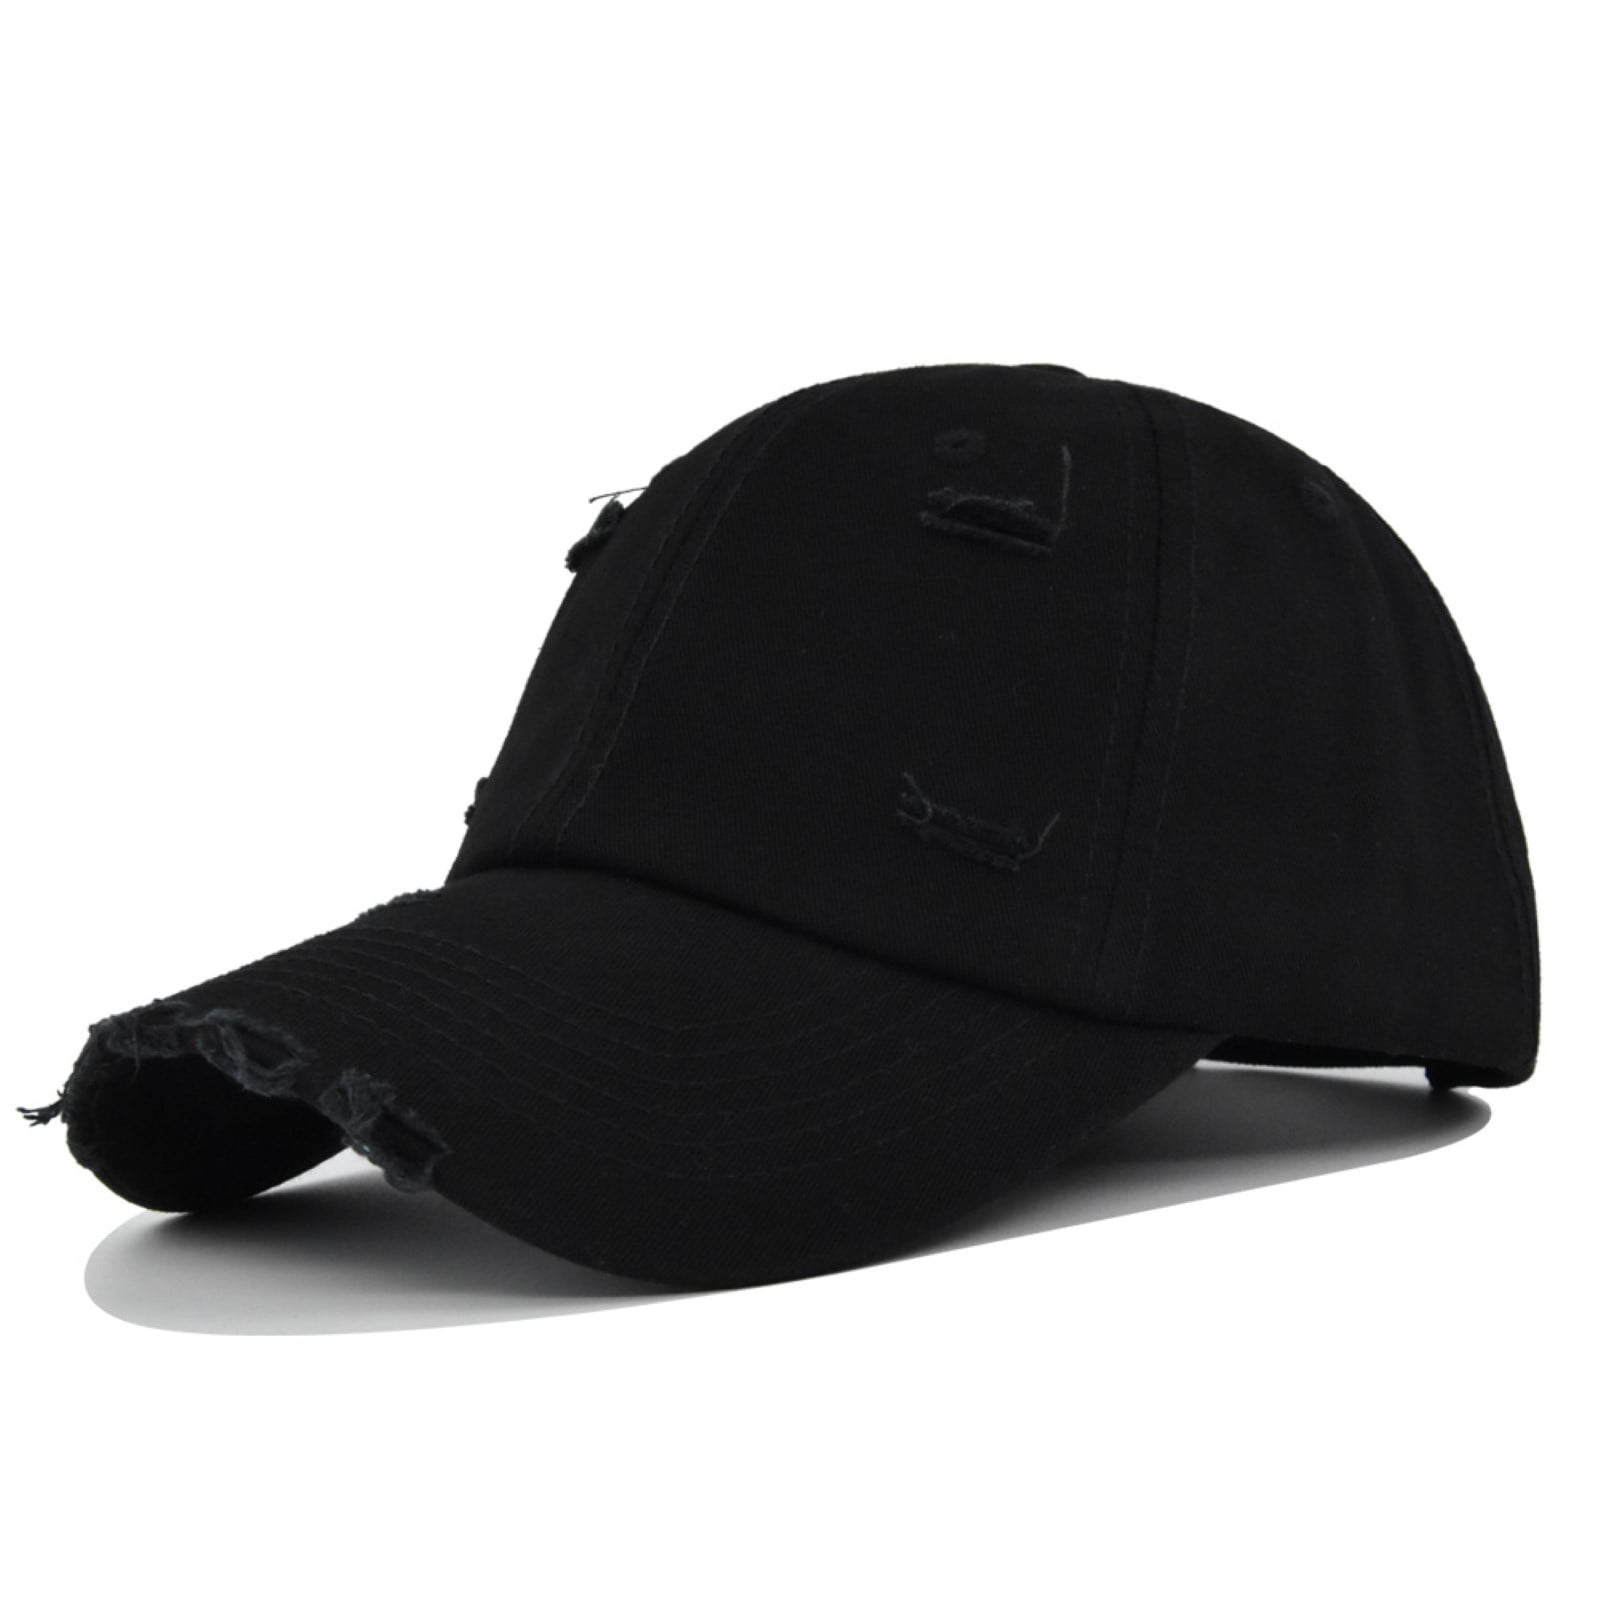 Niuredltd Men's and Women's Ripped Baseball Cap Solid Color Twill Trucker Cap Curved Wide Brim Sun Hat Black One size, Adult unisex